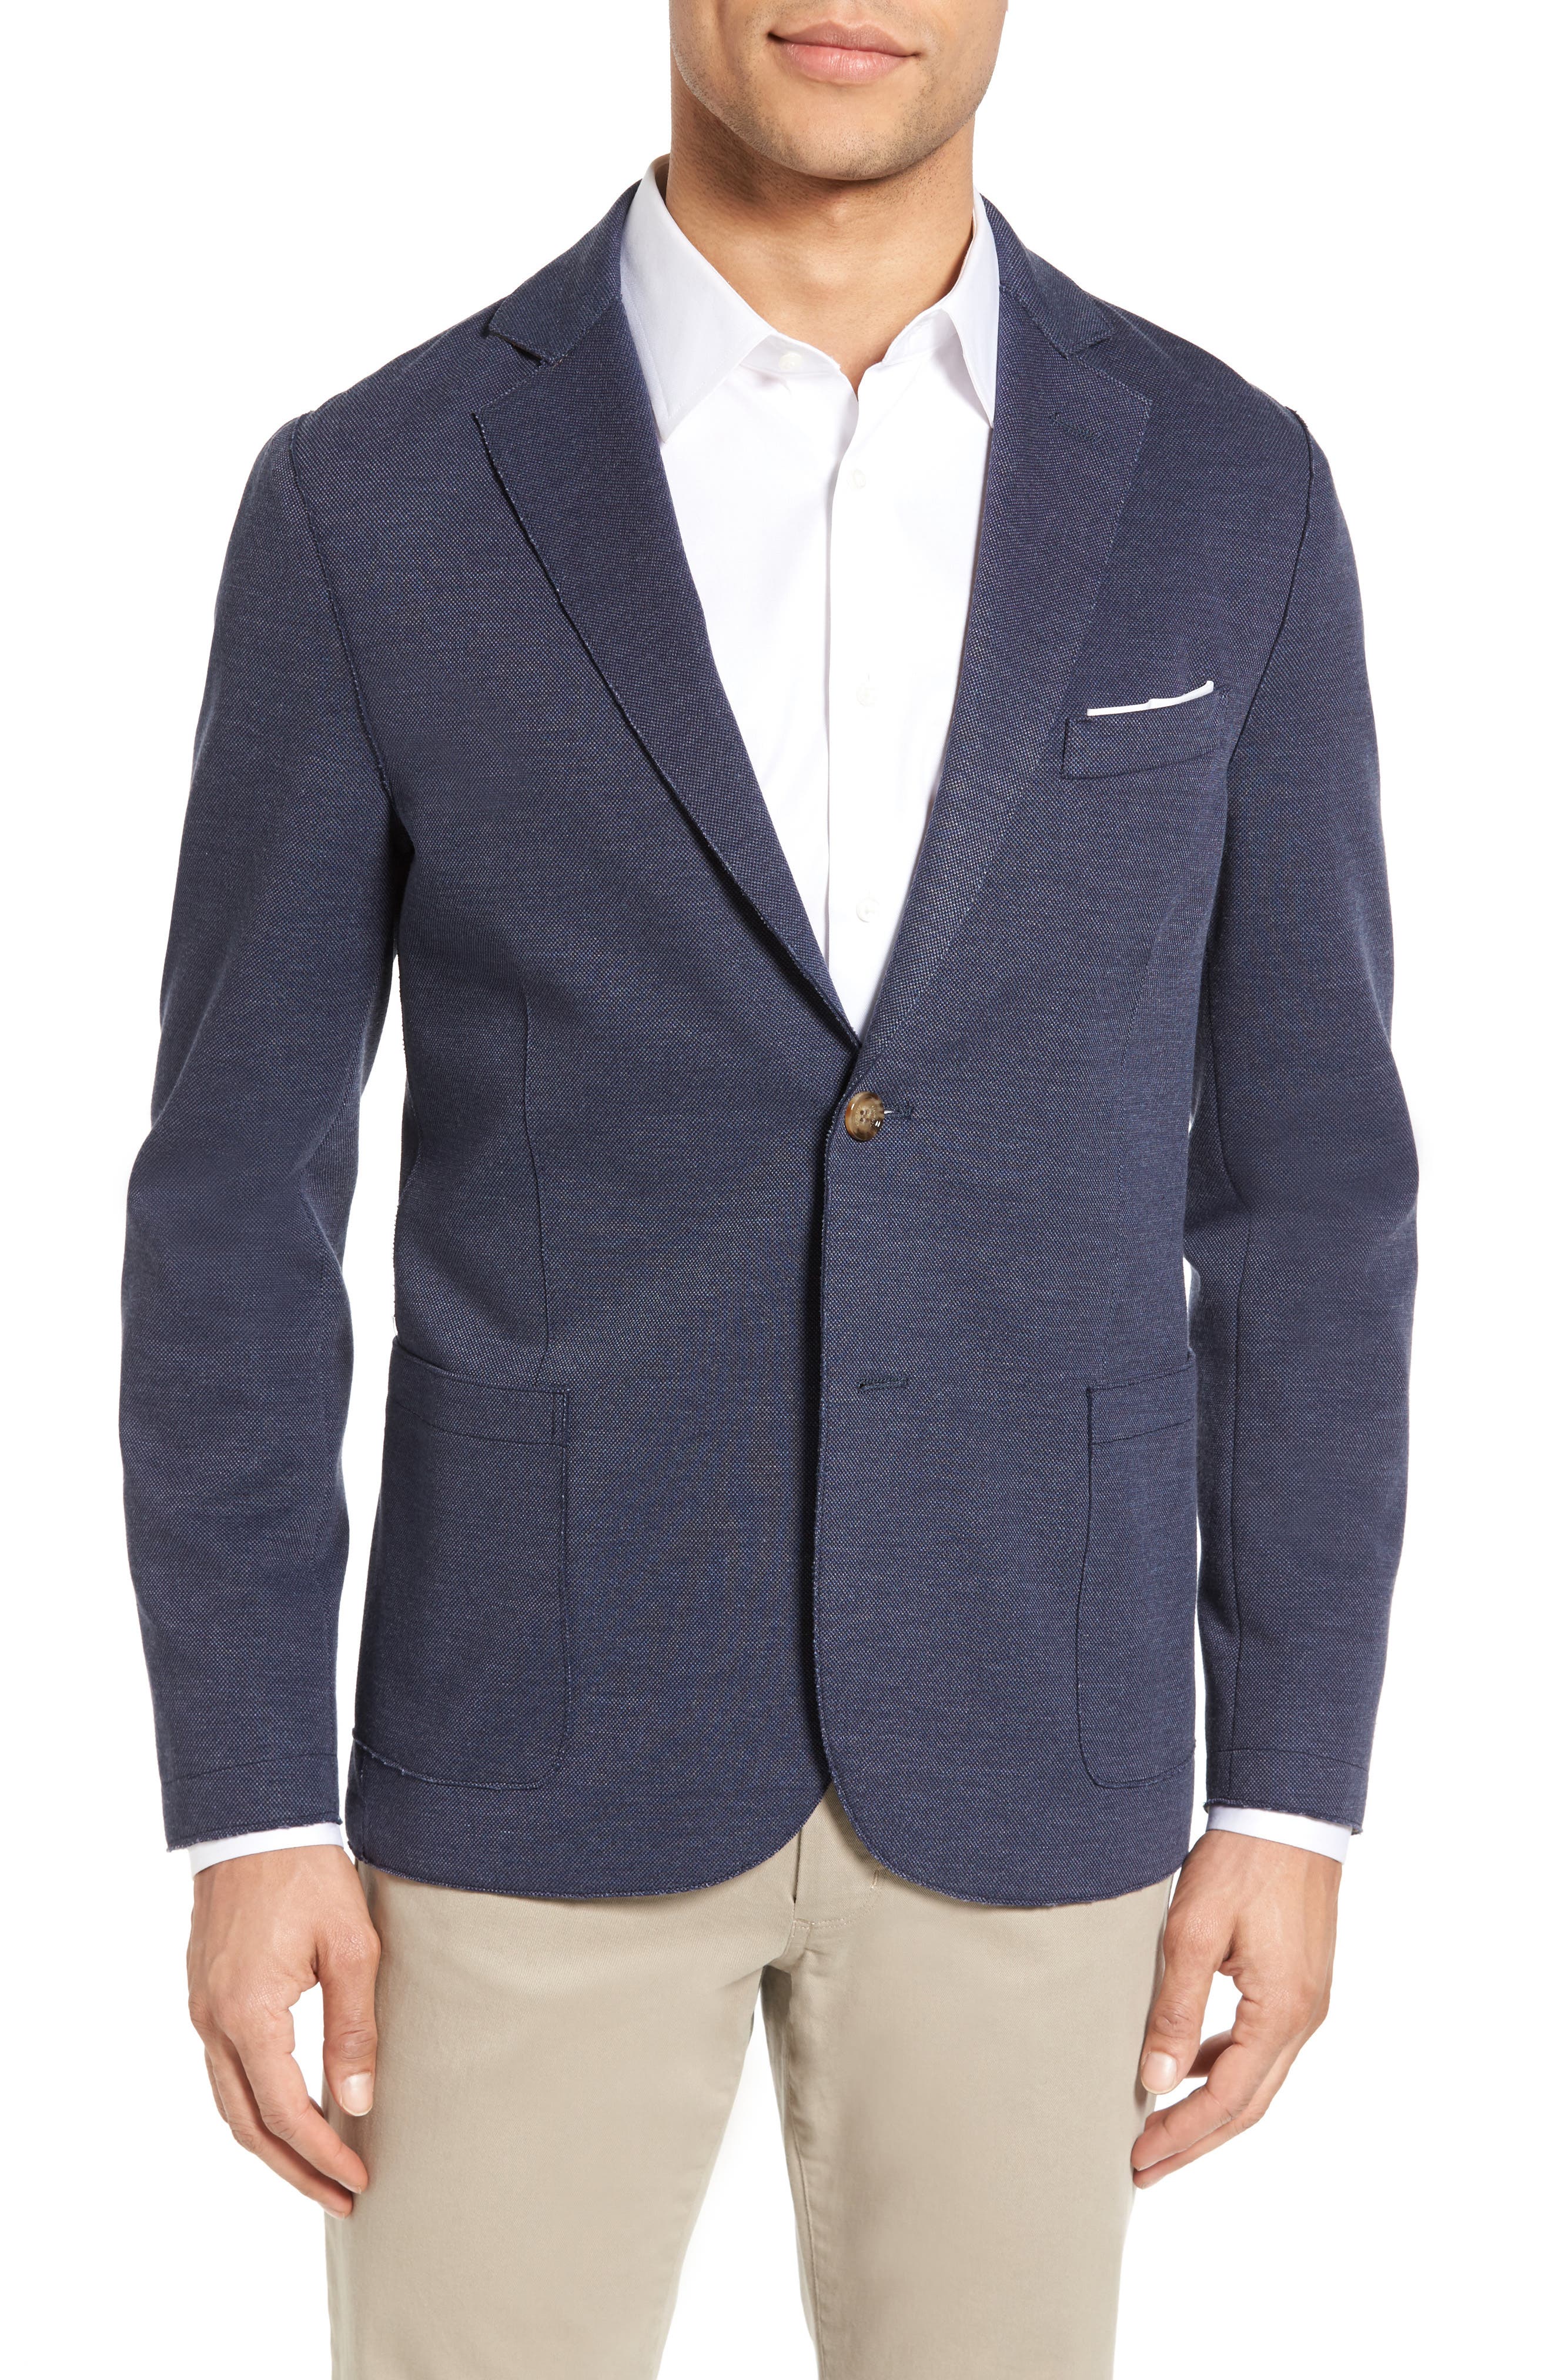 Abetteric Mens Stand Collar Knit Sleeves Blazer Sport Coat Jacket 